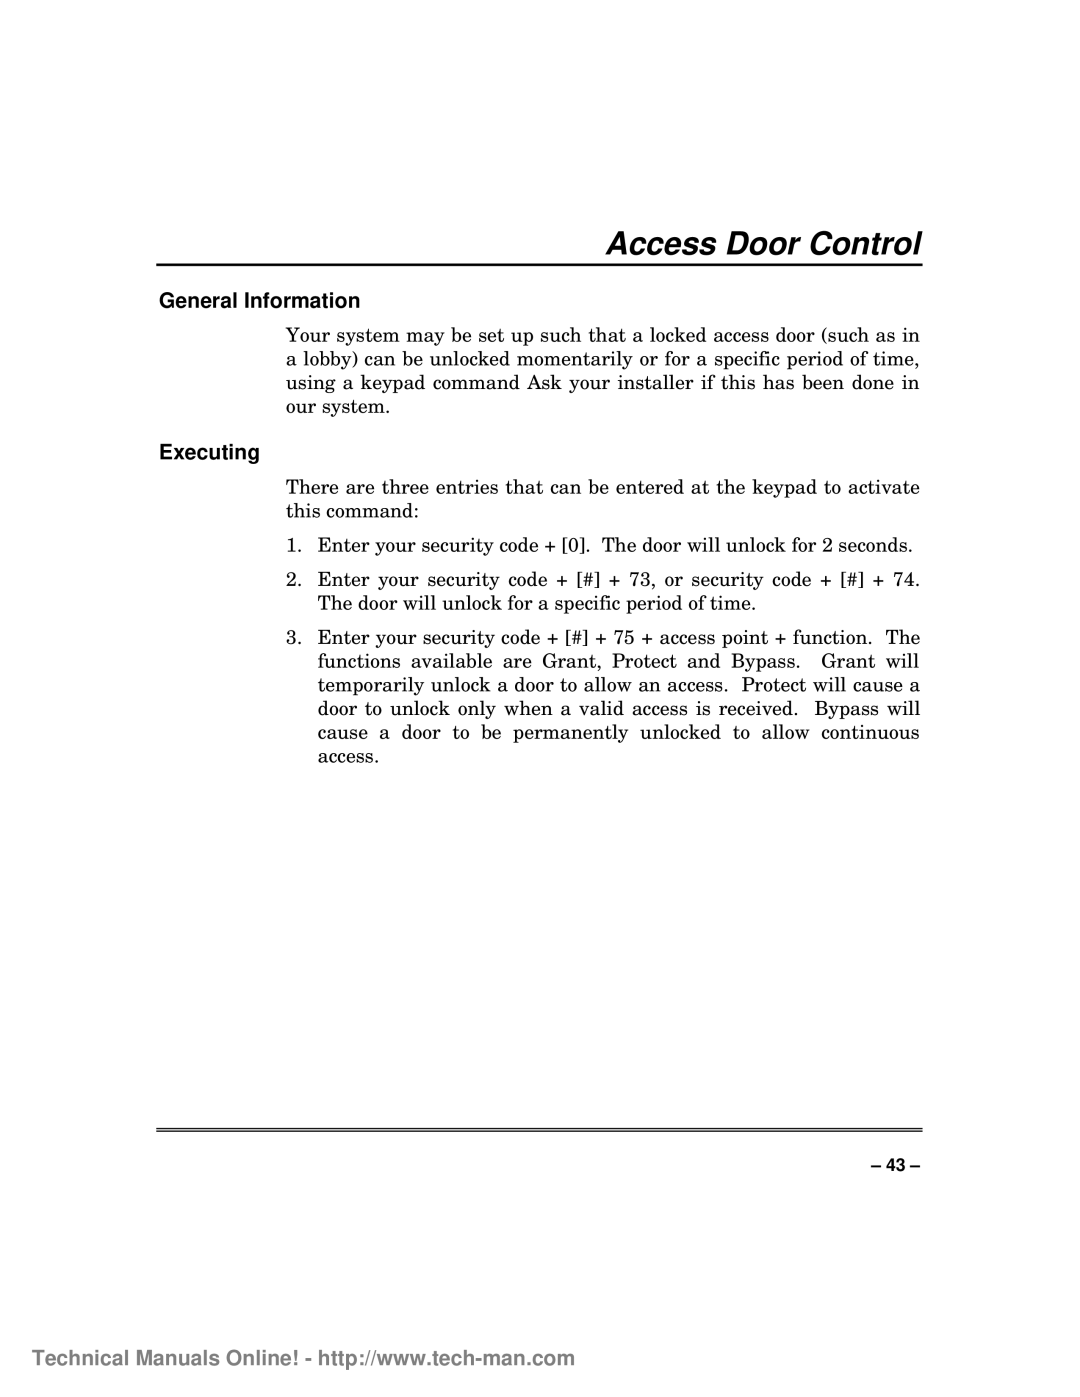 First Alert FA1600C/CA/CB, fa1600c technical manual Access Door Control, General Information, Executing 